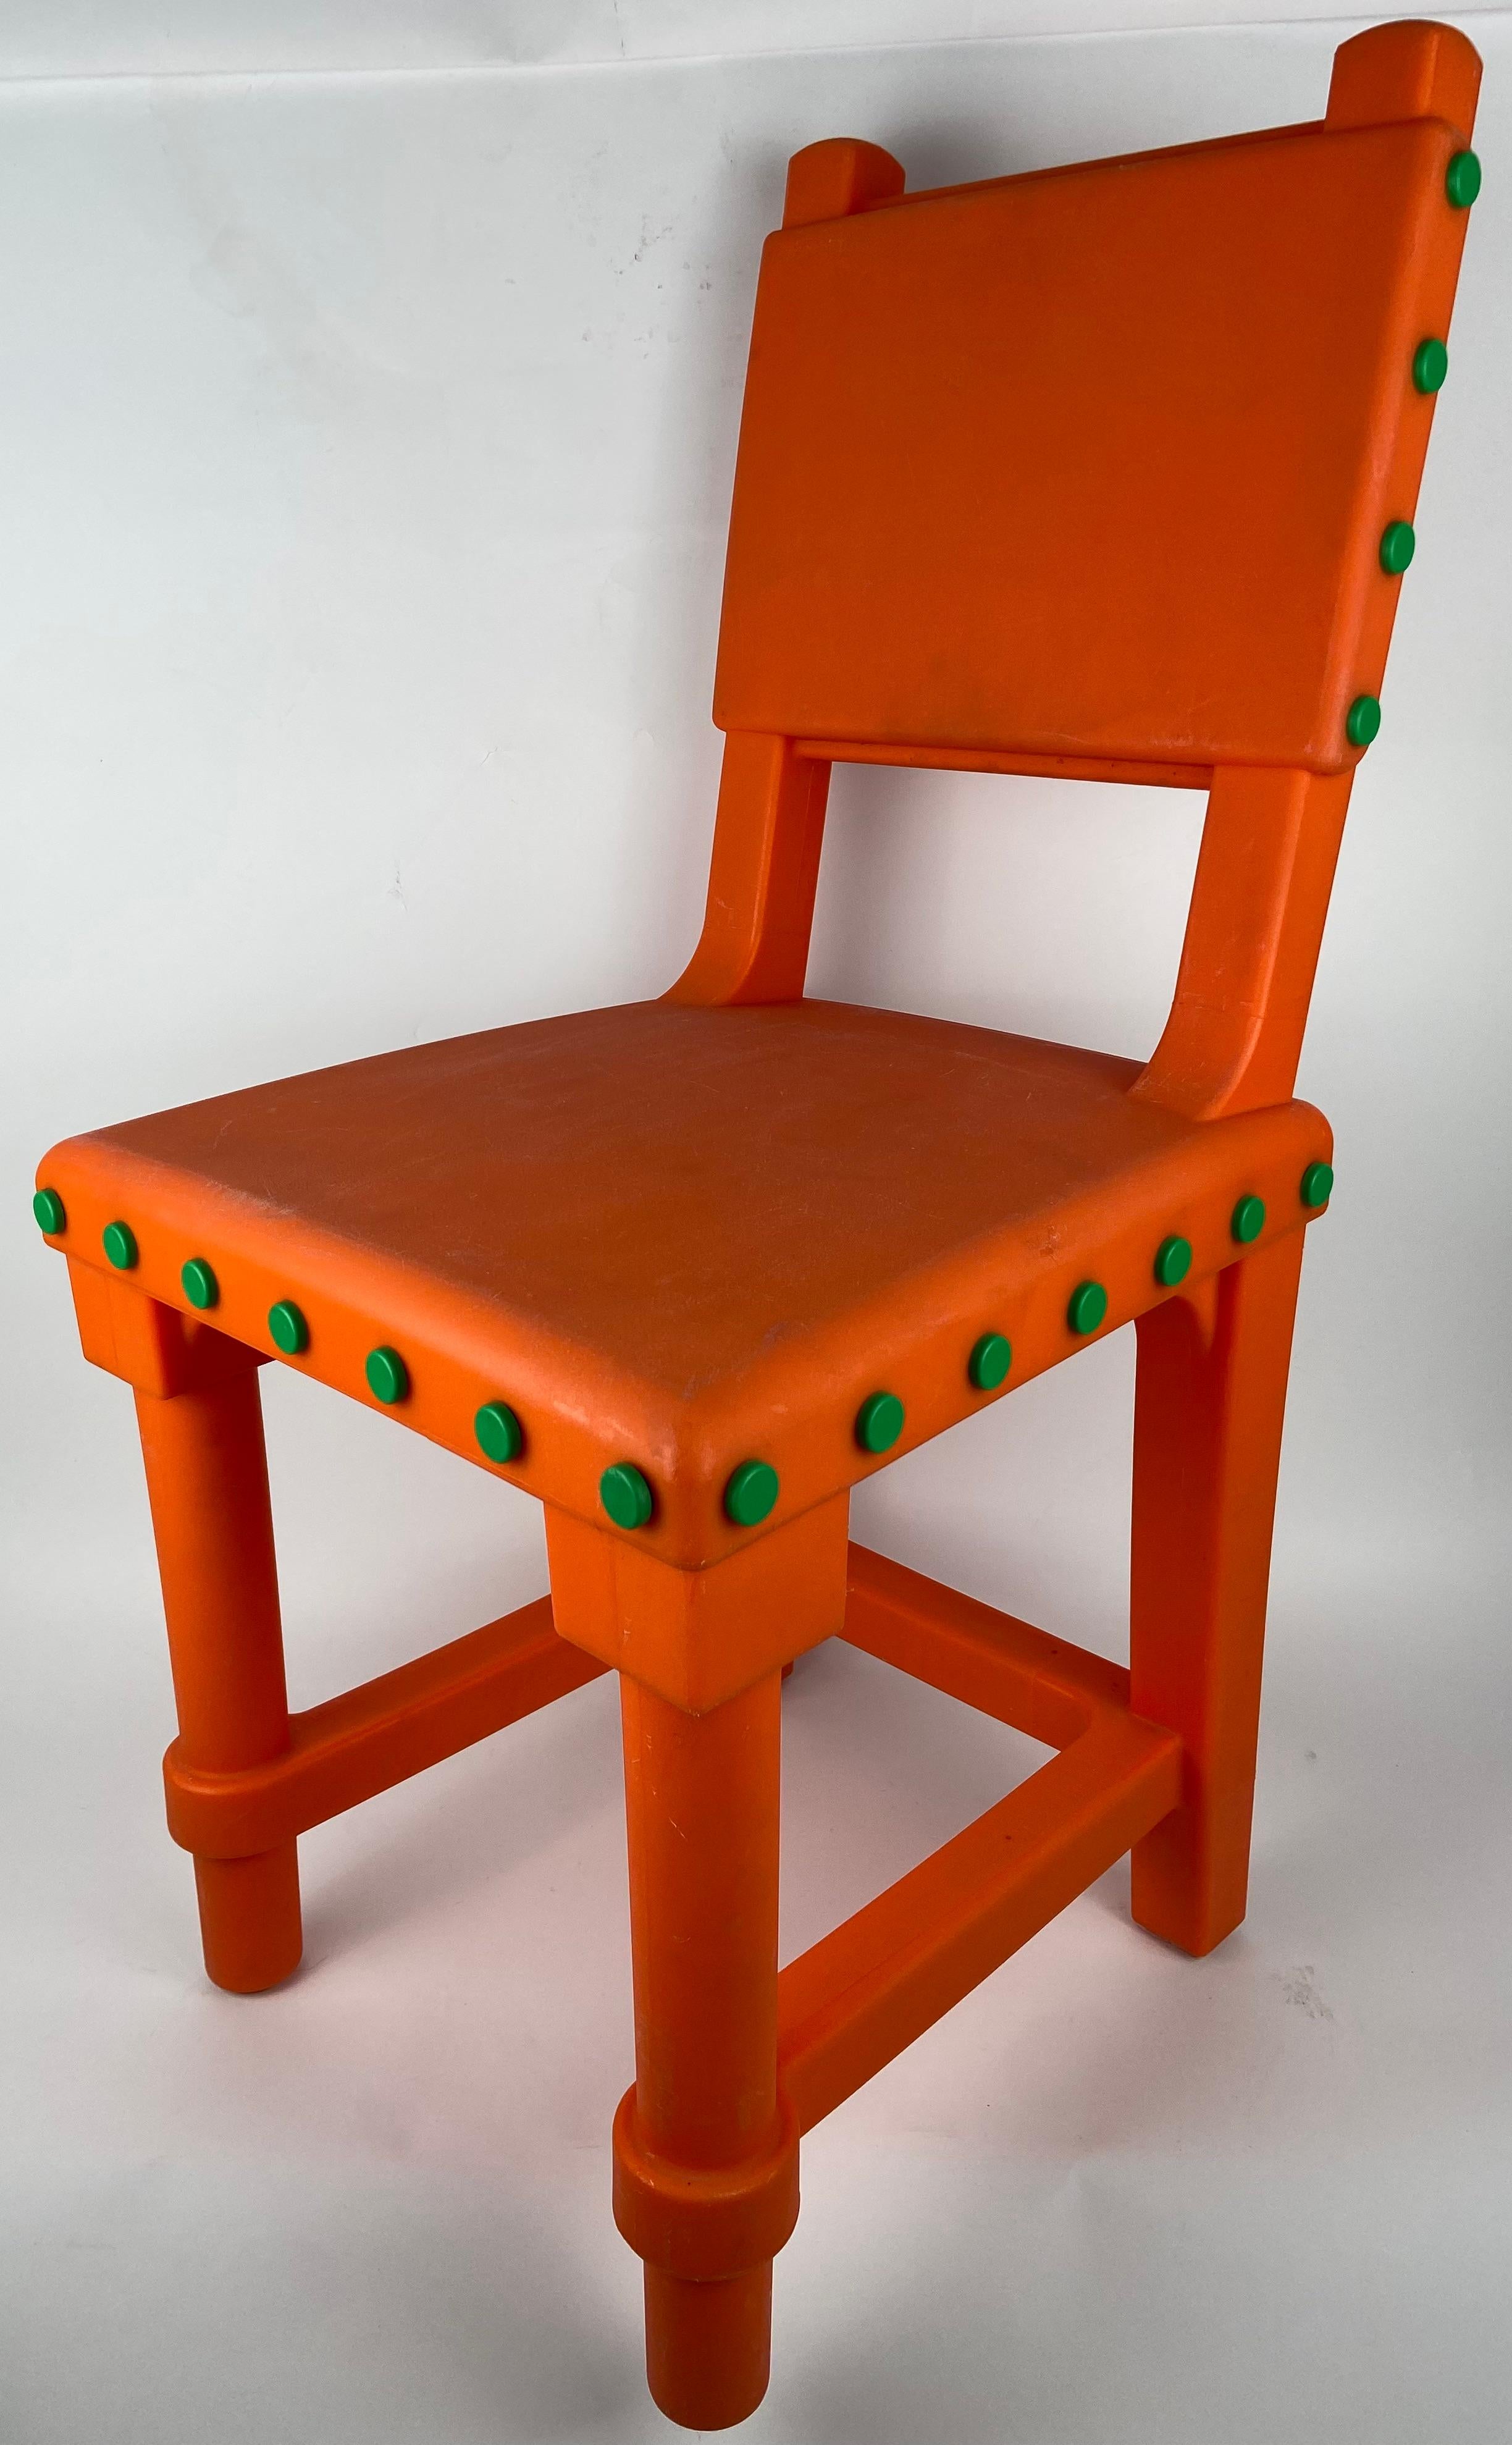 Gothic chair by Moooi in orange. Designer: Studio Job. Circa 2012